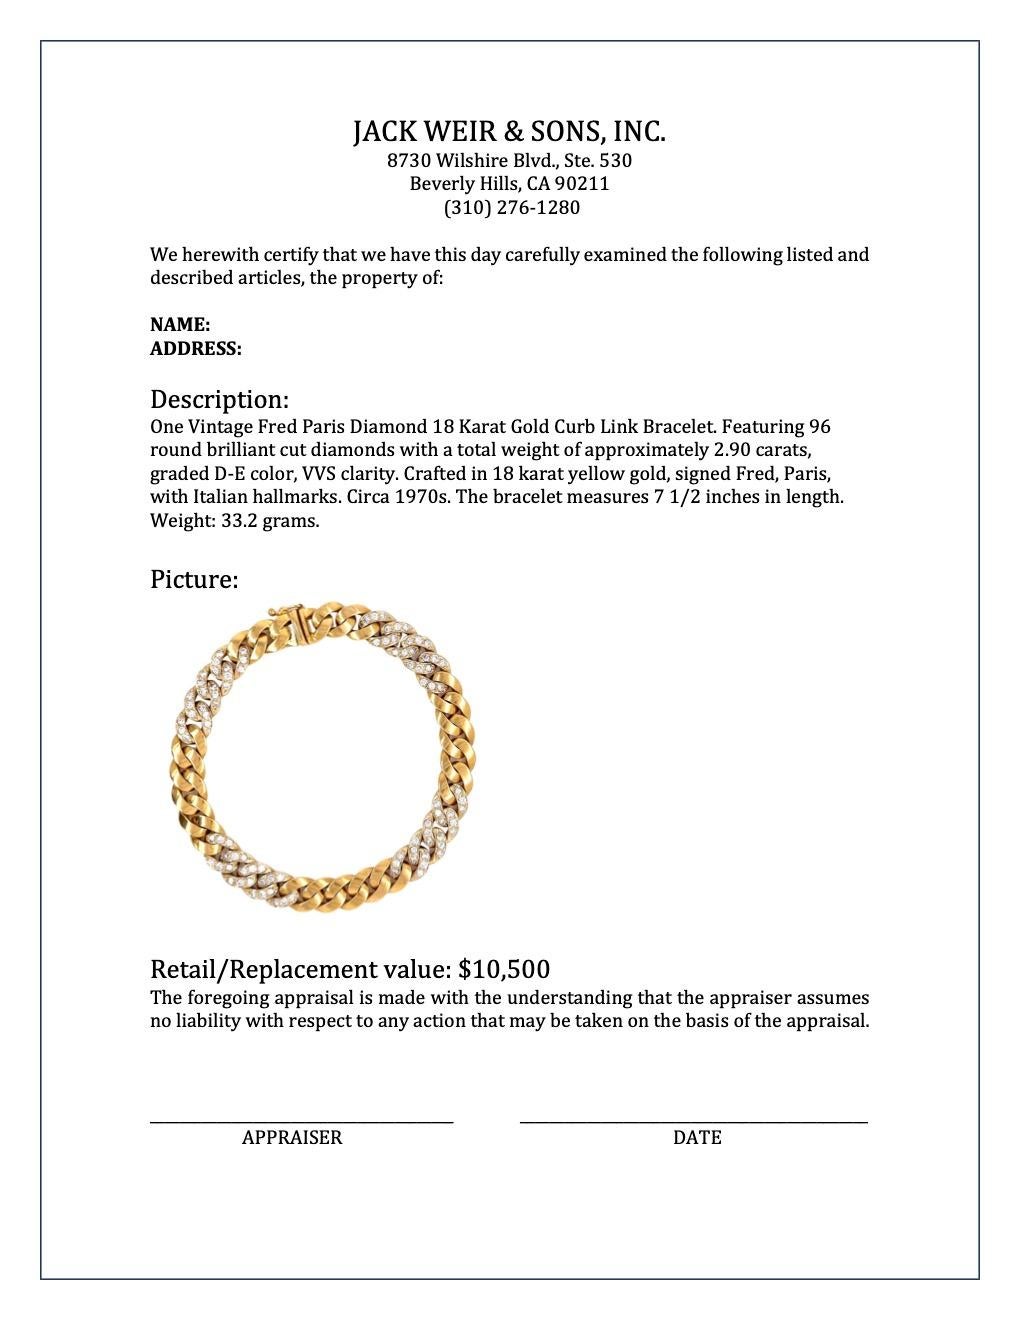 Round Cut Vintage Fred Paris Diamond 18 Karat Gold Curb Link Bracelet